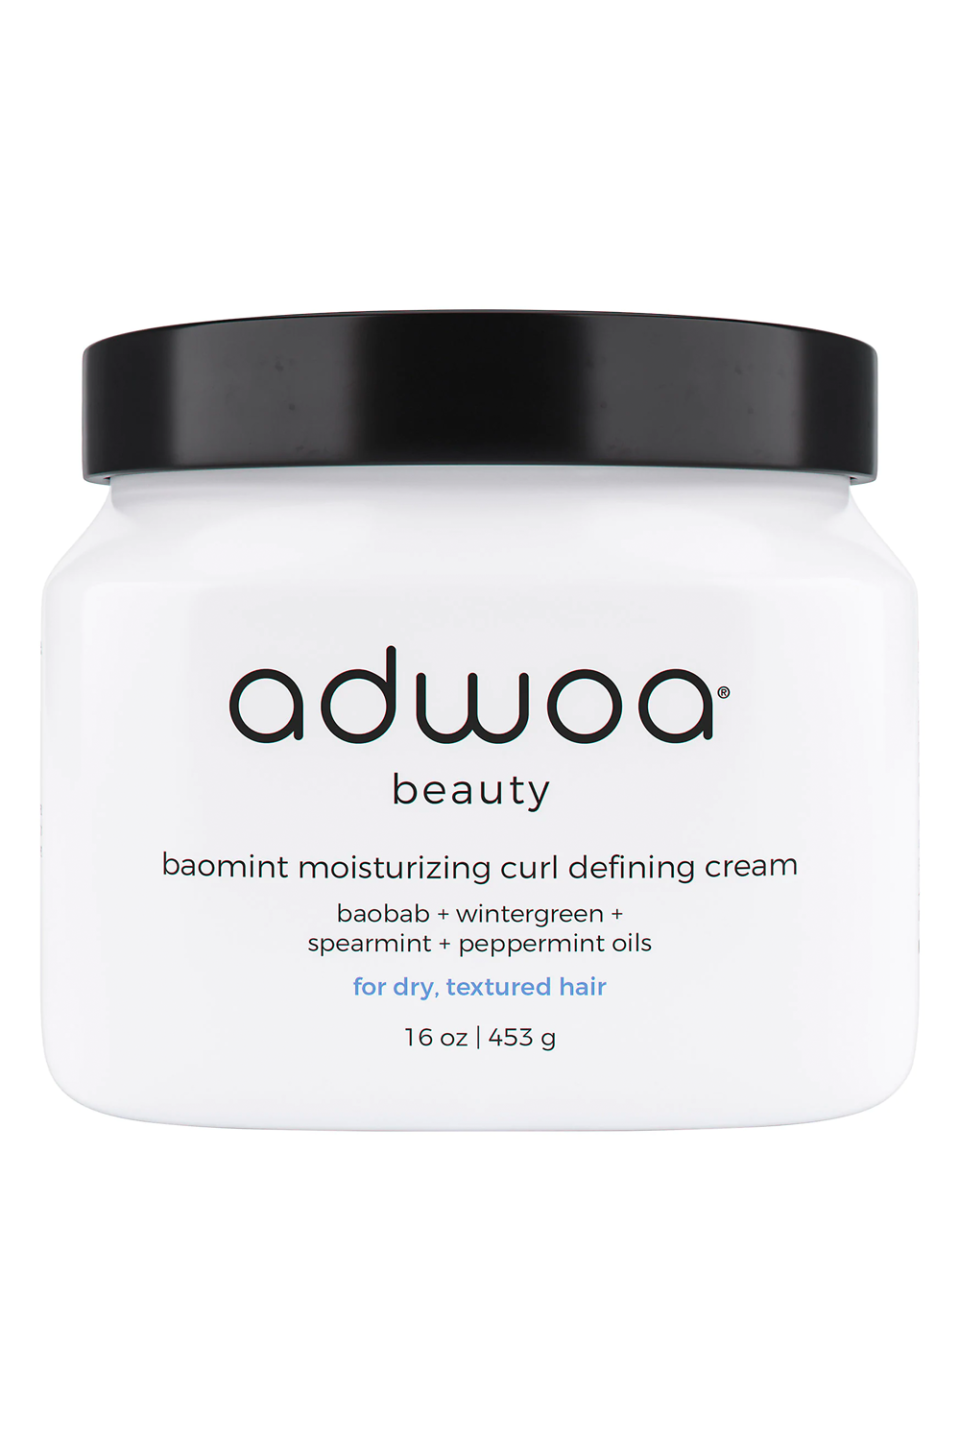 4) Adwoa Beauty Baomint Moisturizing Curl Defining Cream